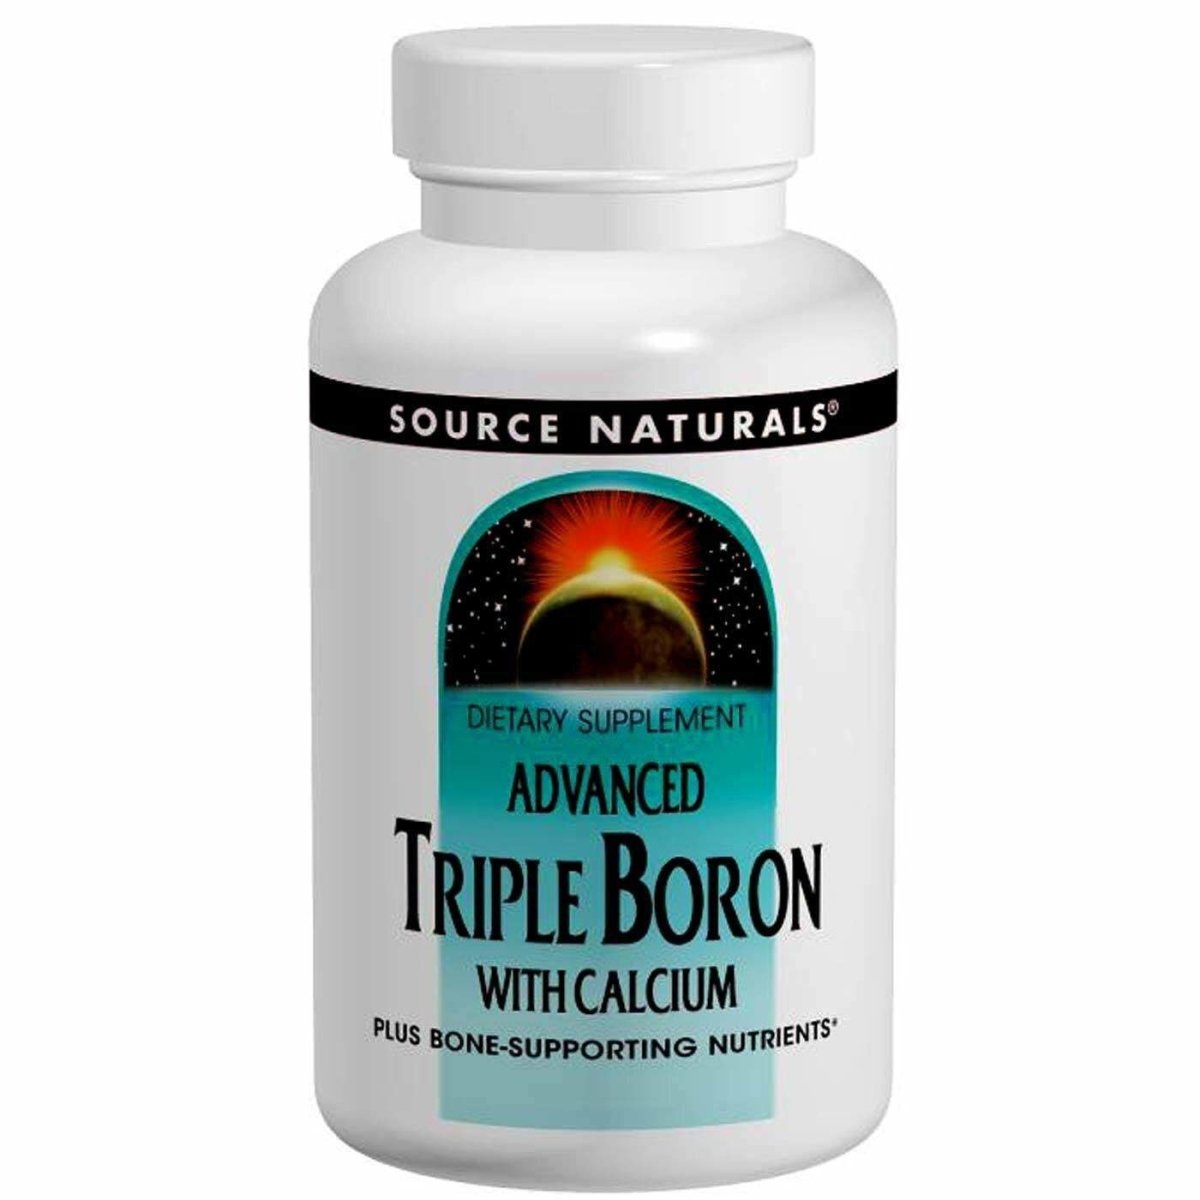 Source Naturals, Advanced Triple Boron with Calcium, 120 ct